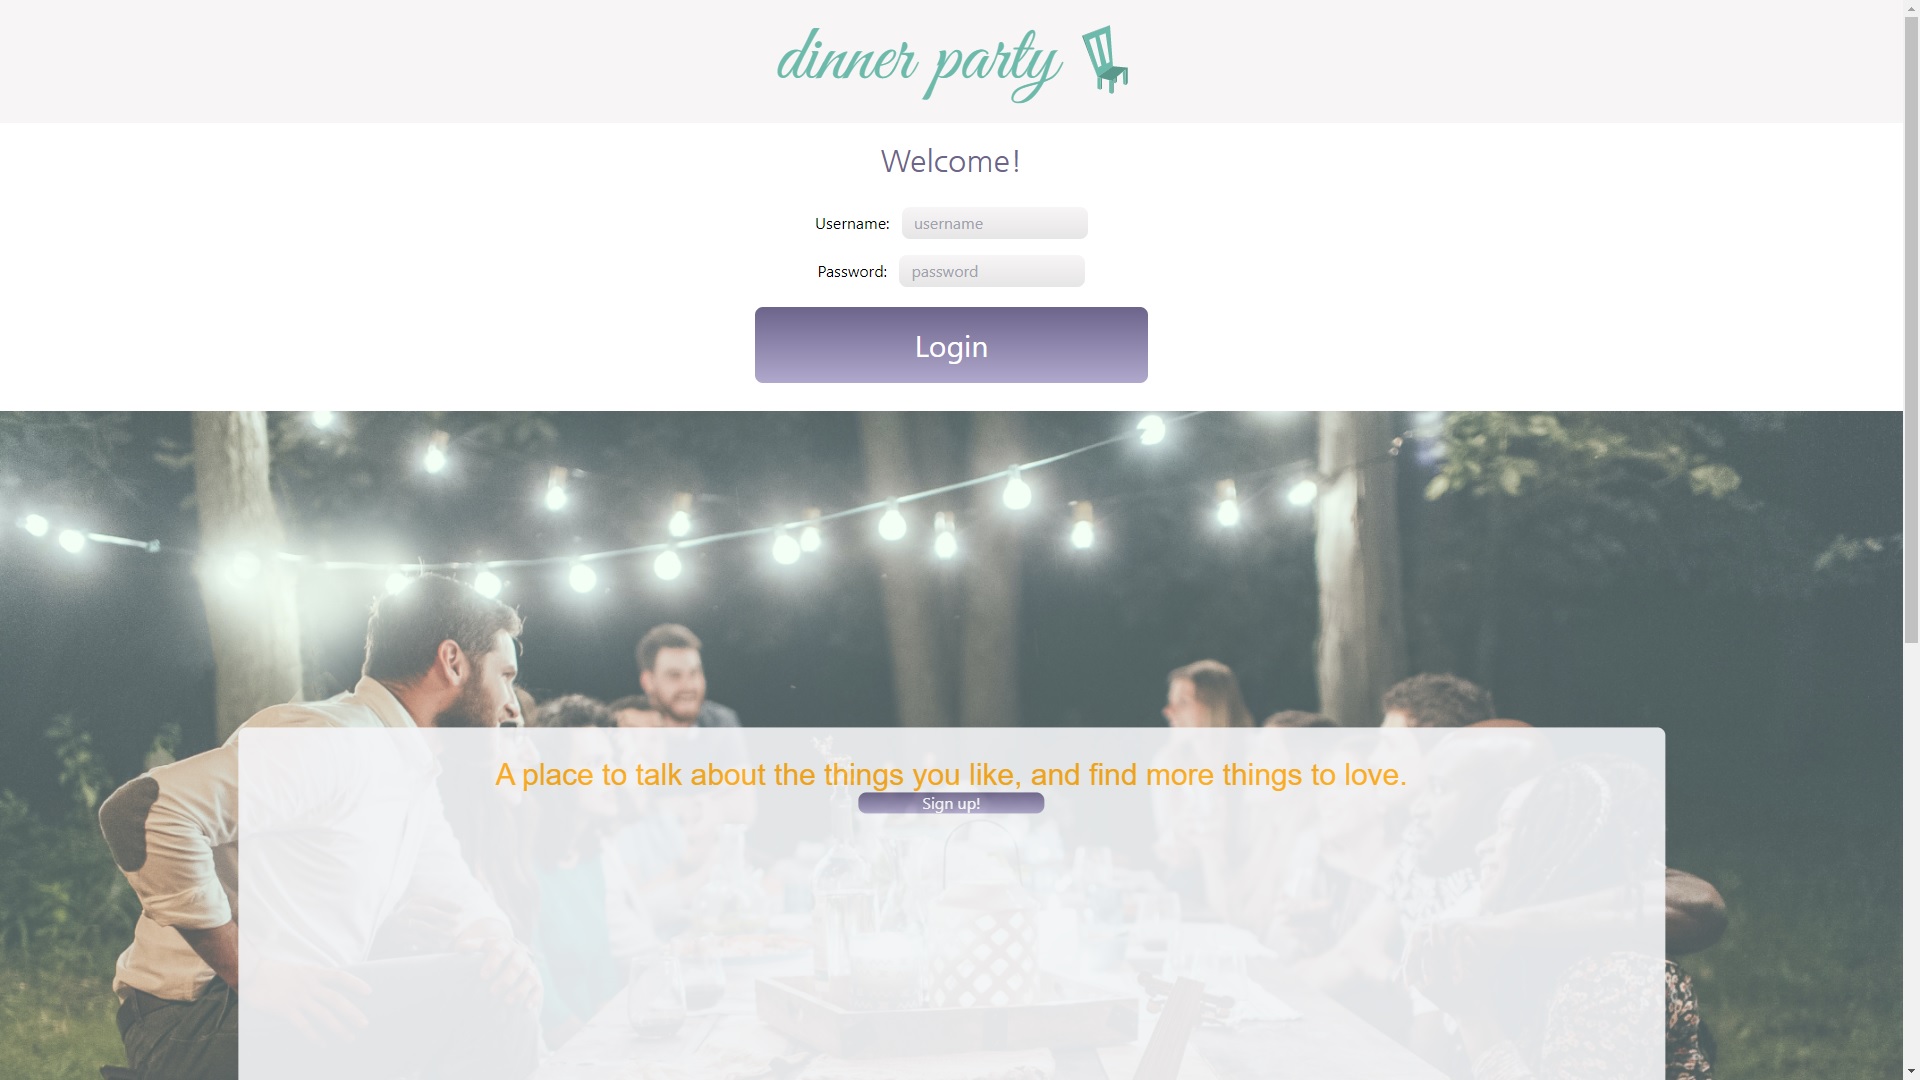 Dinner Party landing page screenshot